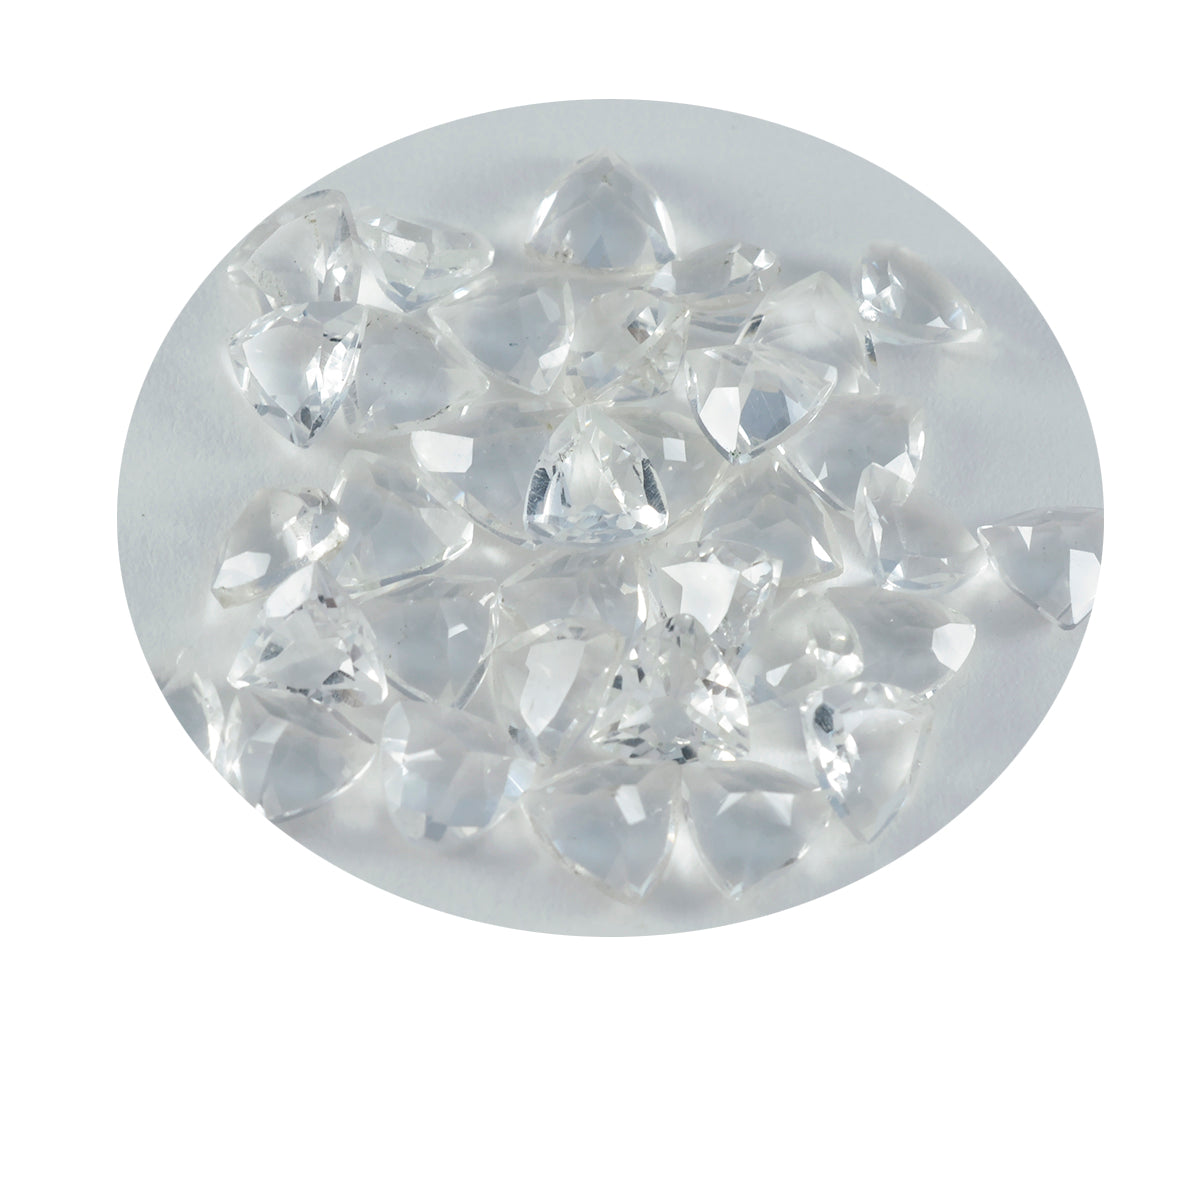 Riyogems 1PC White Crystal Quartz Faceted 7x7 mm Trillion Shape superb Quality Gemstone